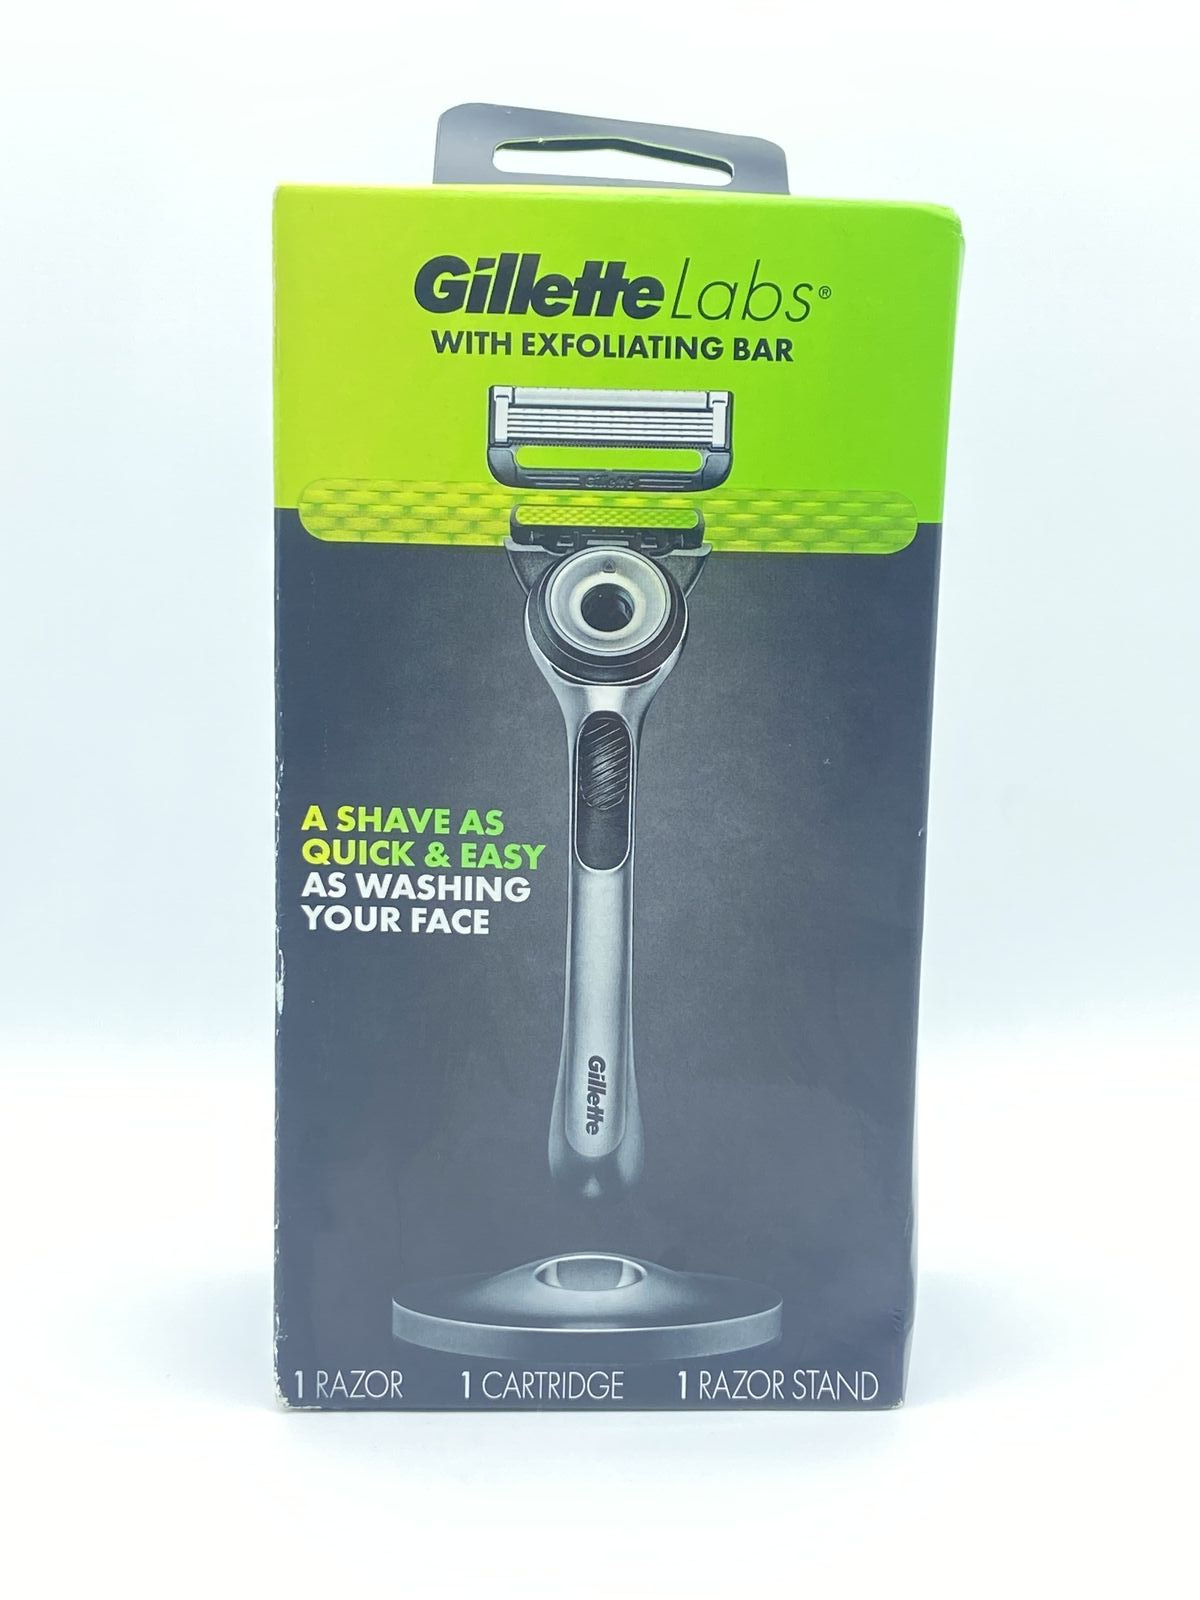 Gillette Labs with Exfoliating Bar, 1 Razor, 1 Cartridge, 1 Razor Stand